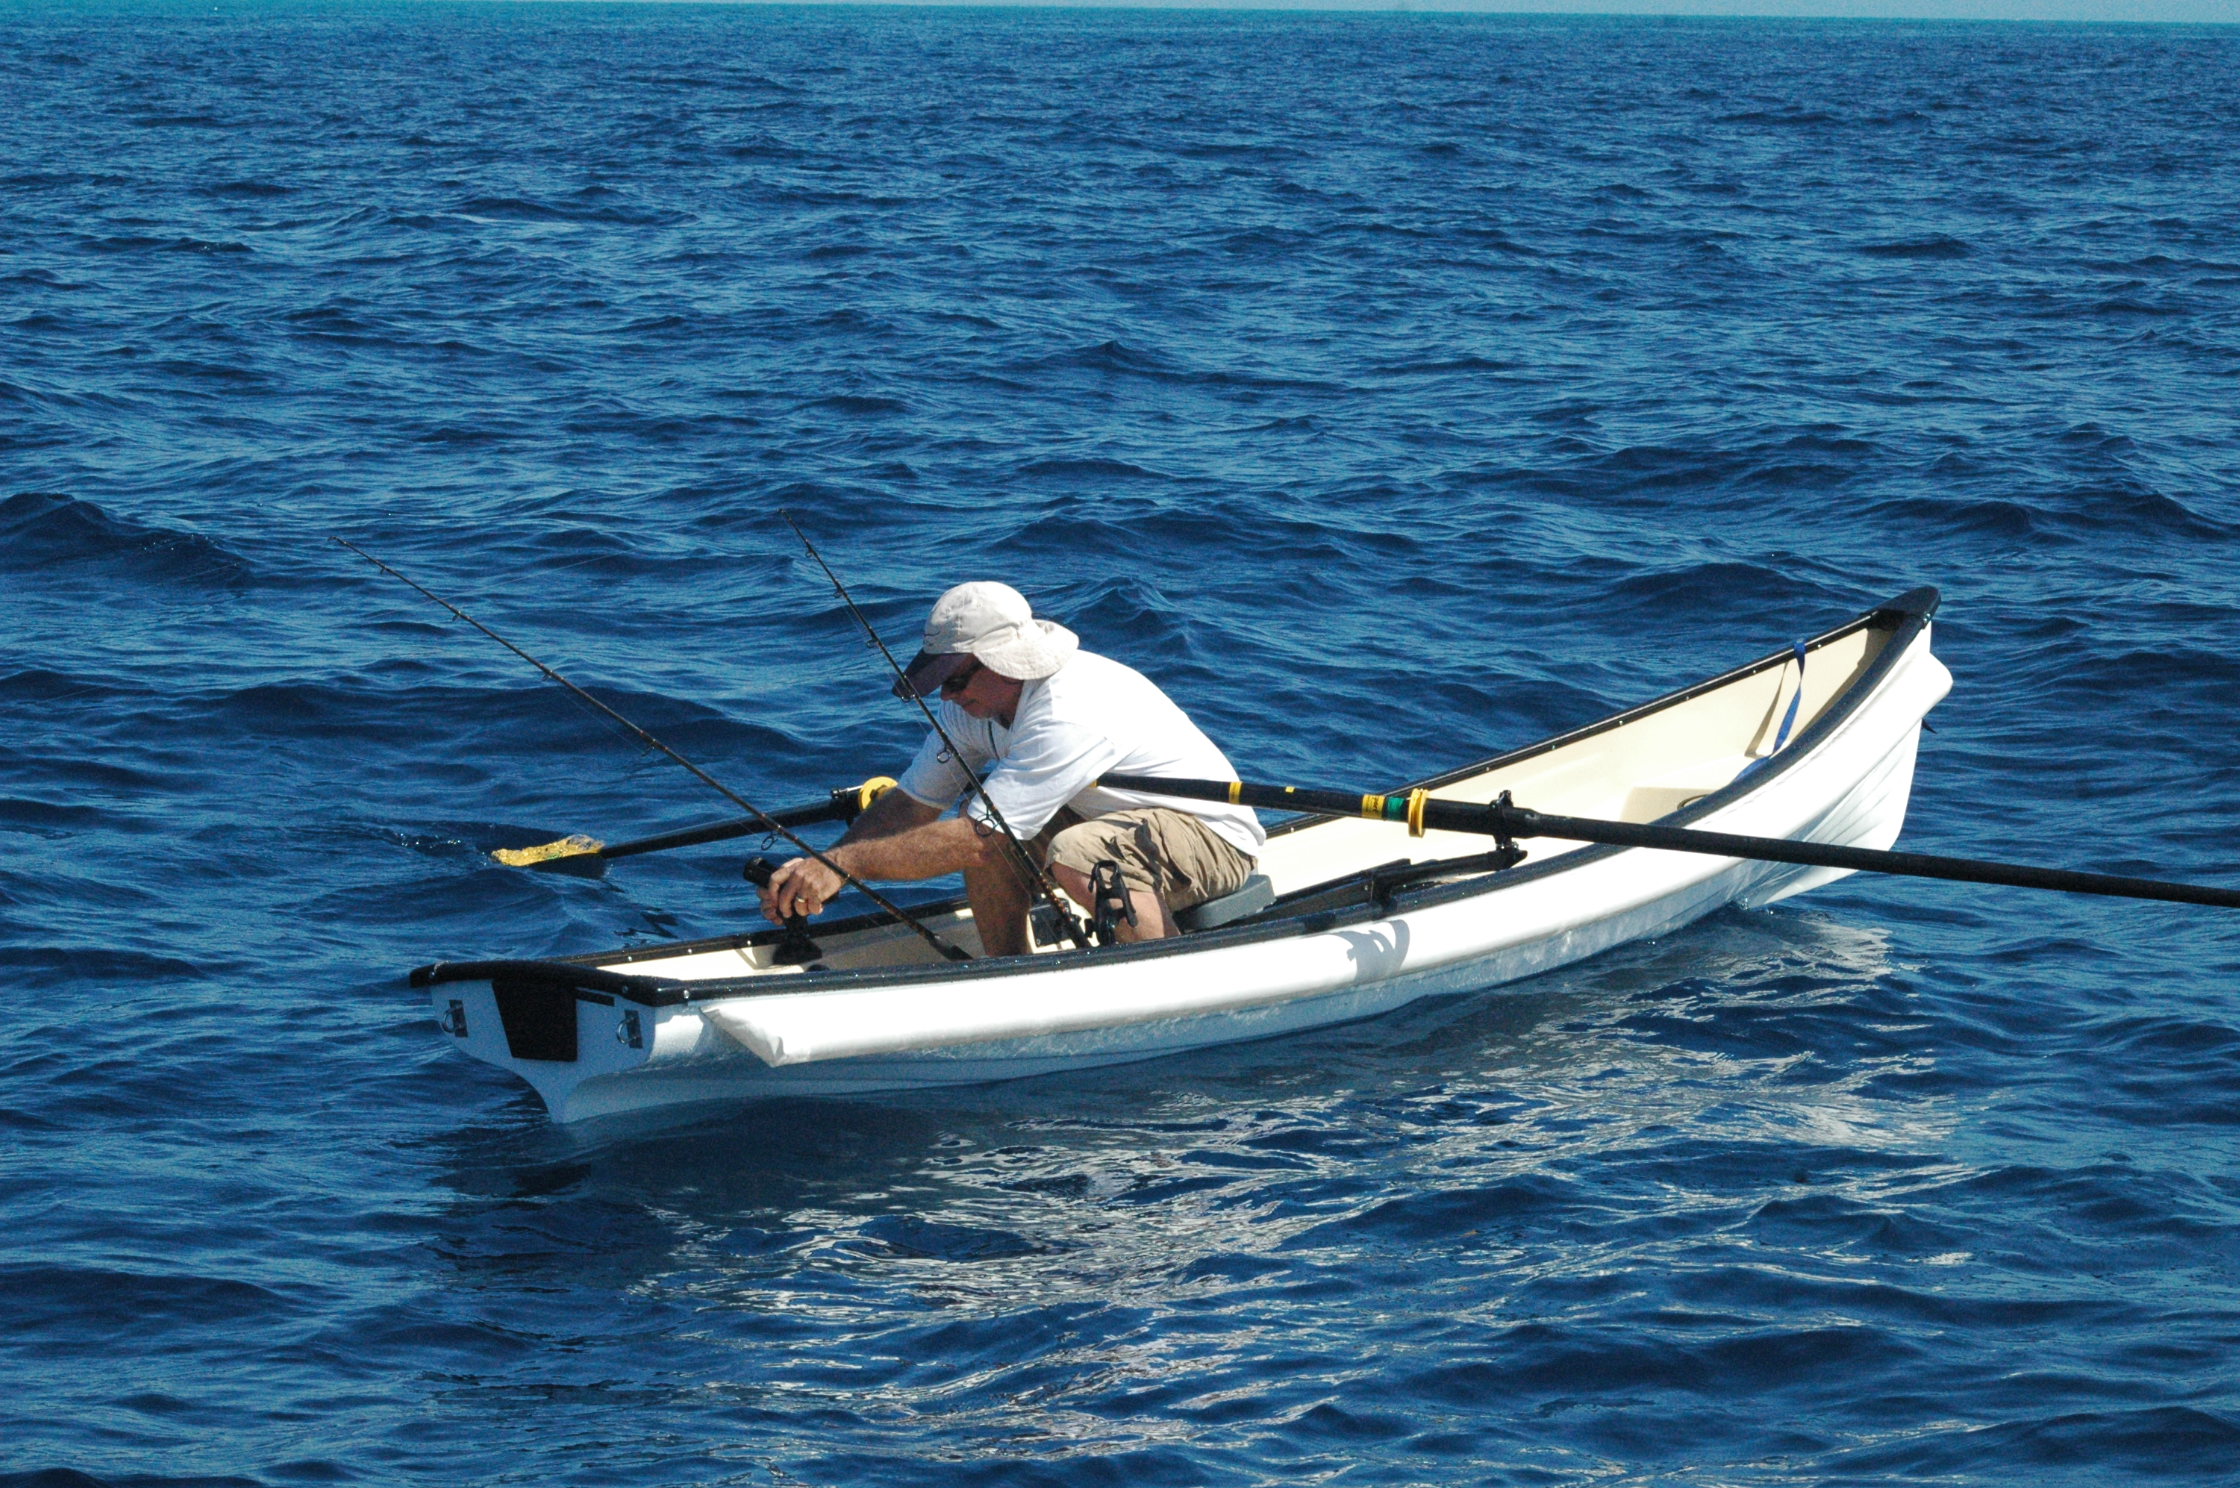 sponsons | Little River Marine - Rowing, Rowing Shells, Row Boat ...